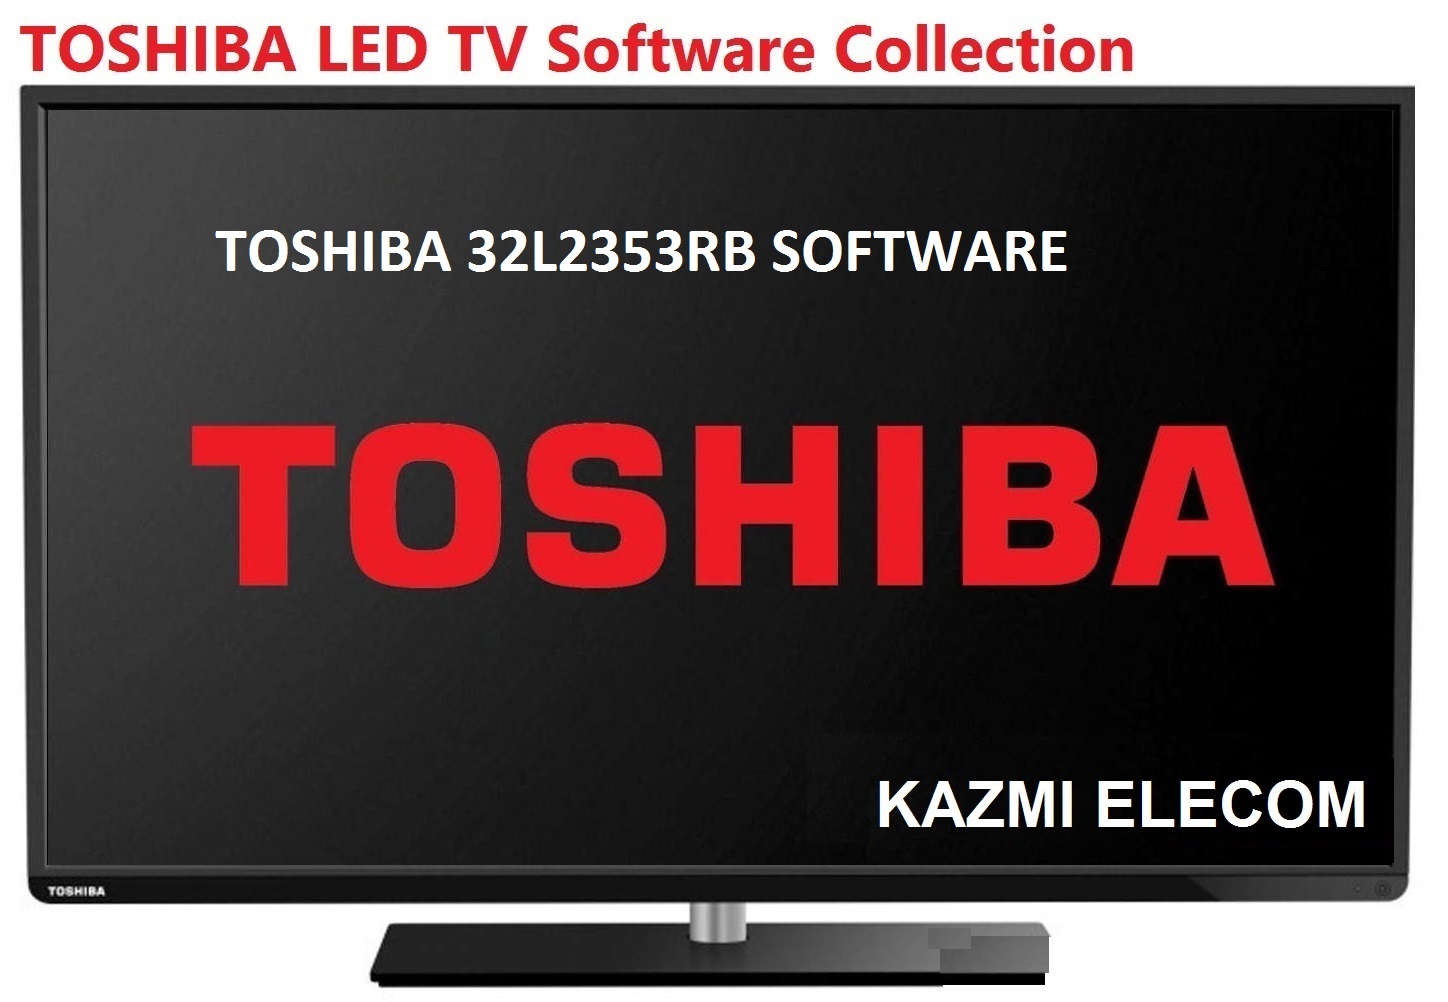 Toshiba 32L2353Rb